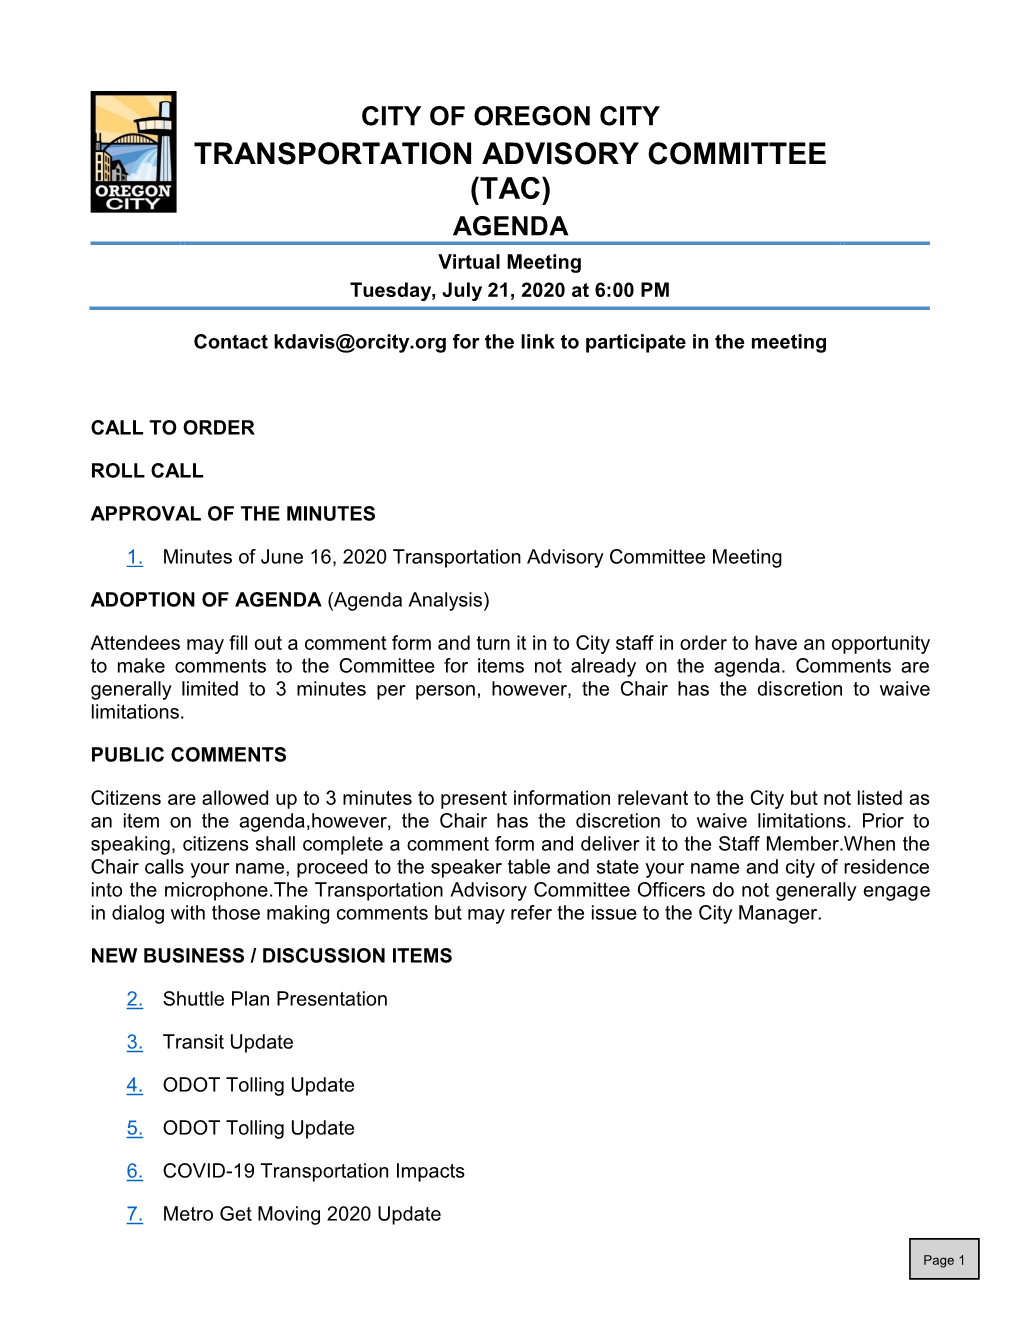 Transportation Advisory Committee (Tac)